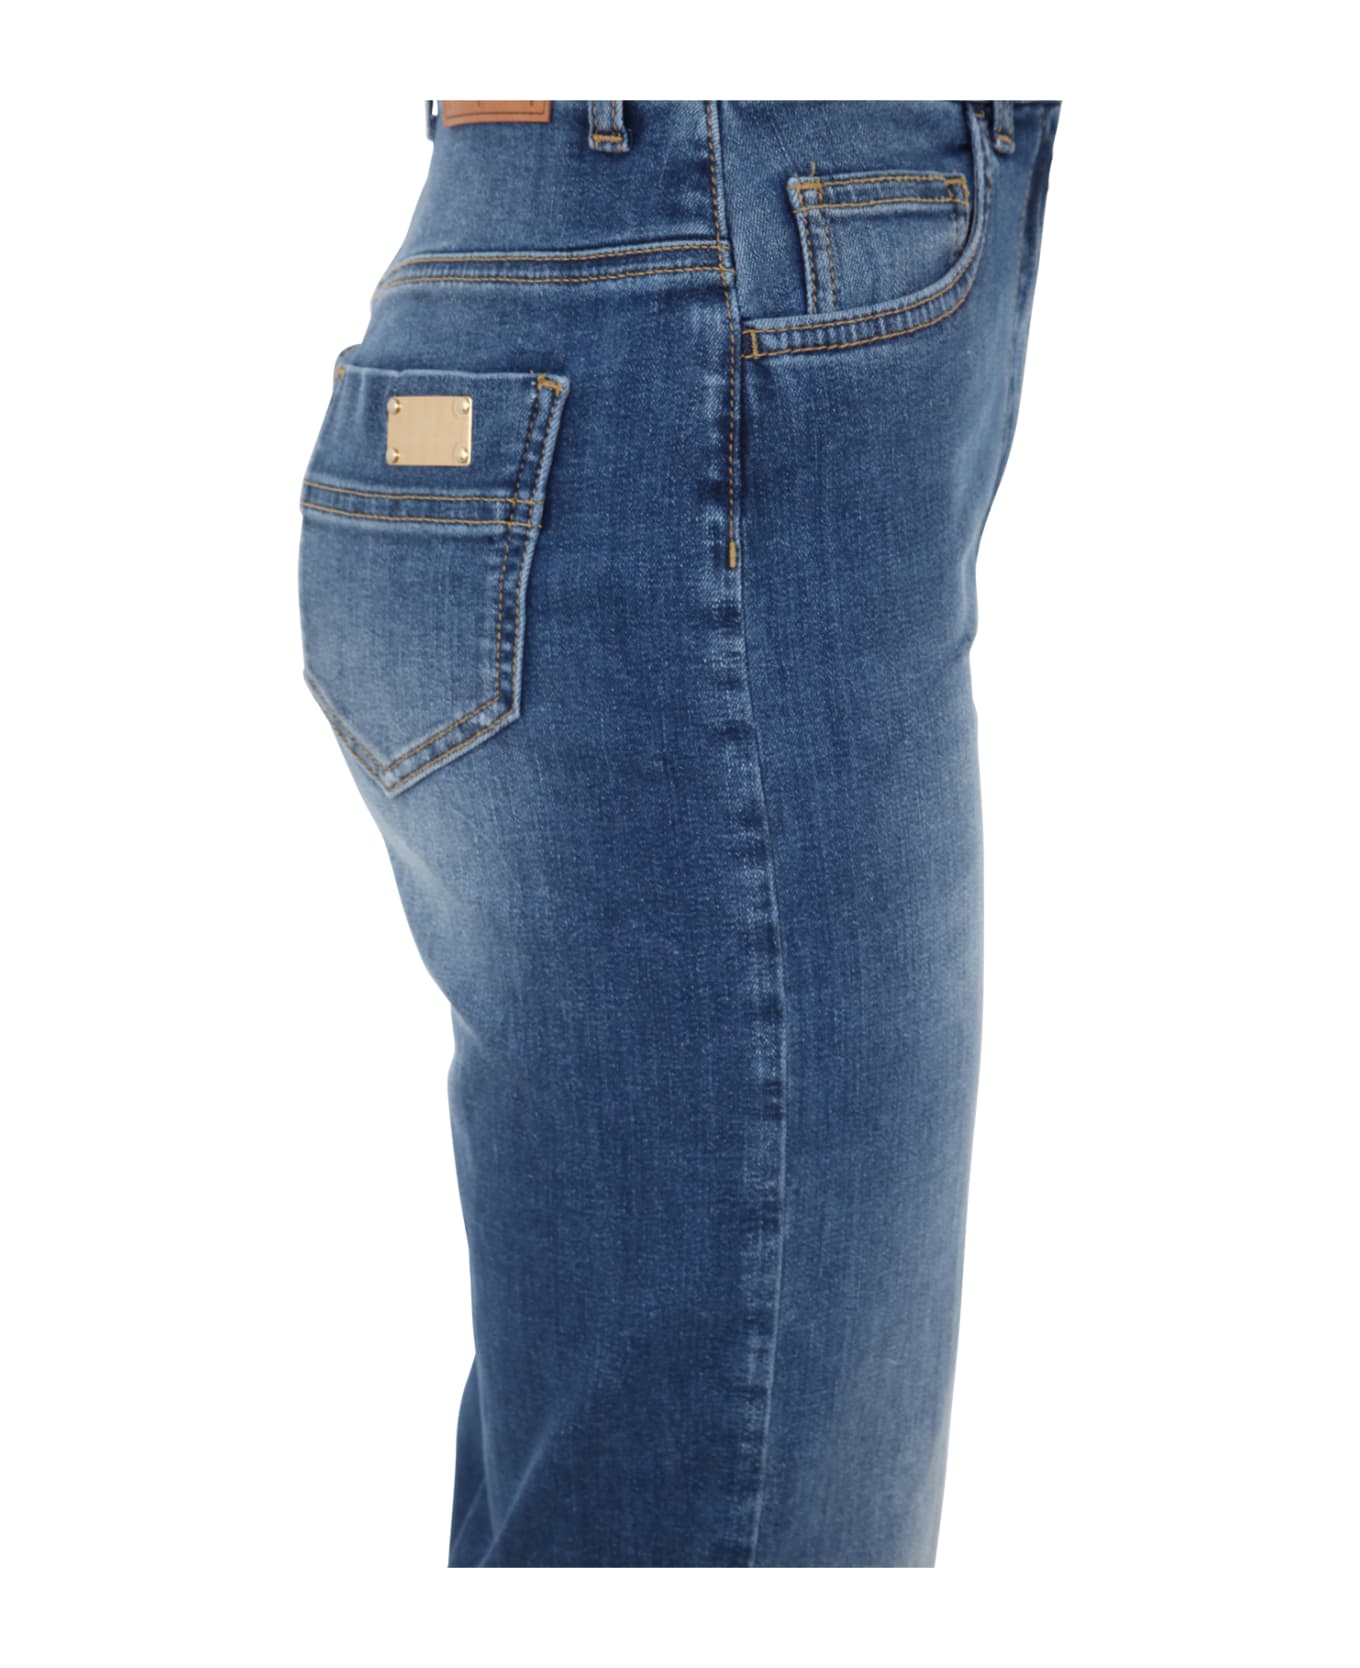 Elisabetta Franchi Flair Crop Jeans - Blue Denim